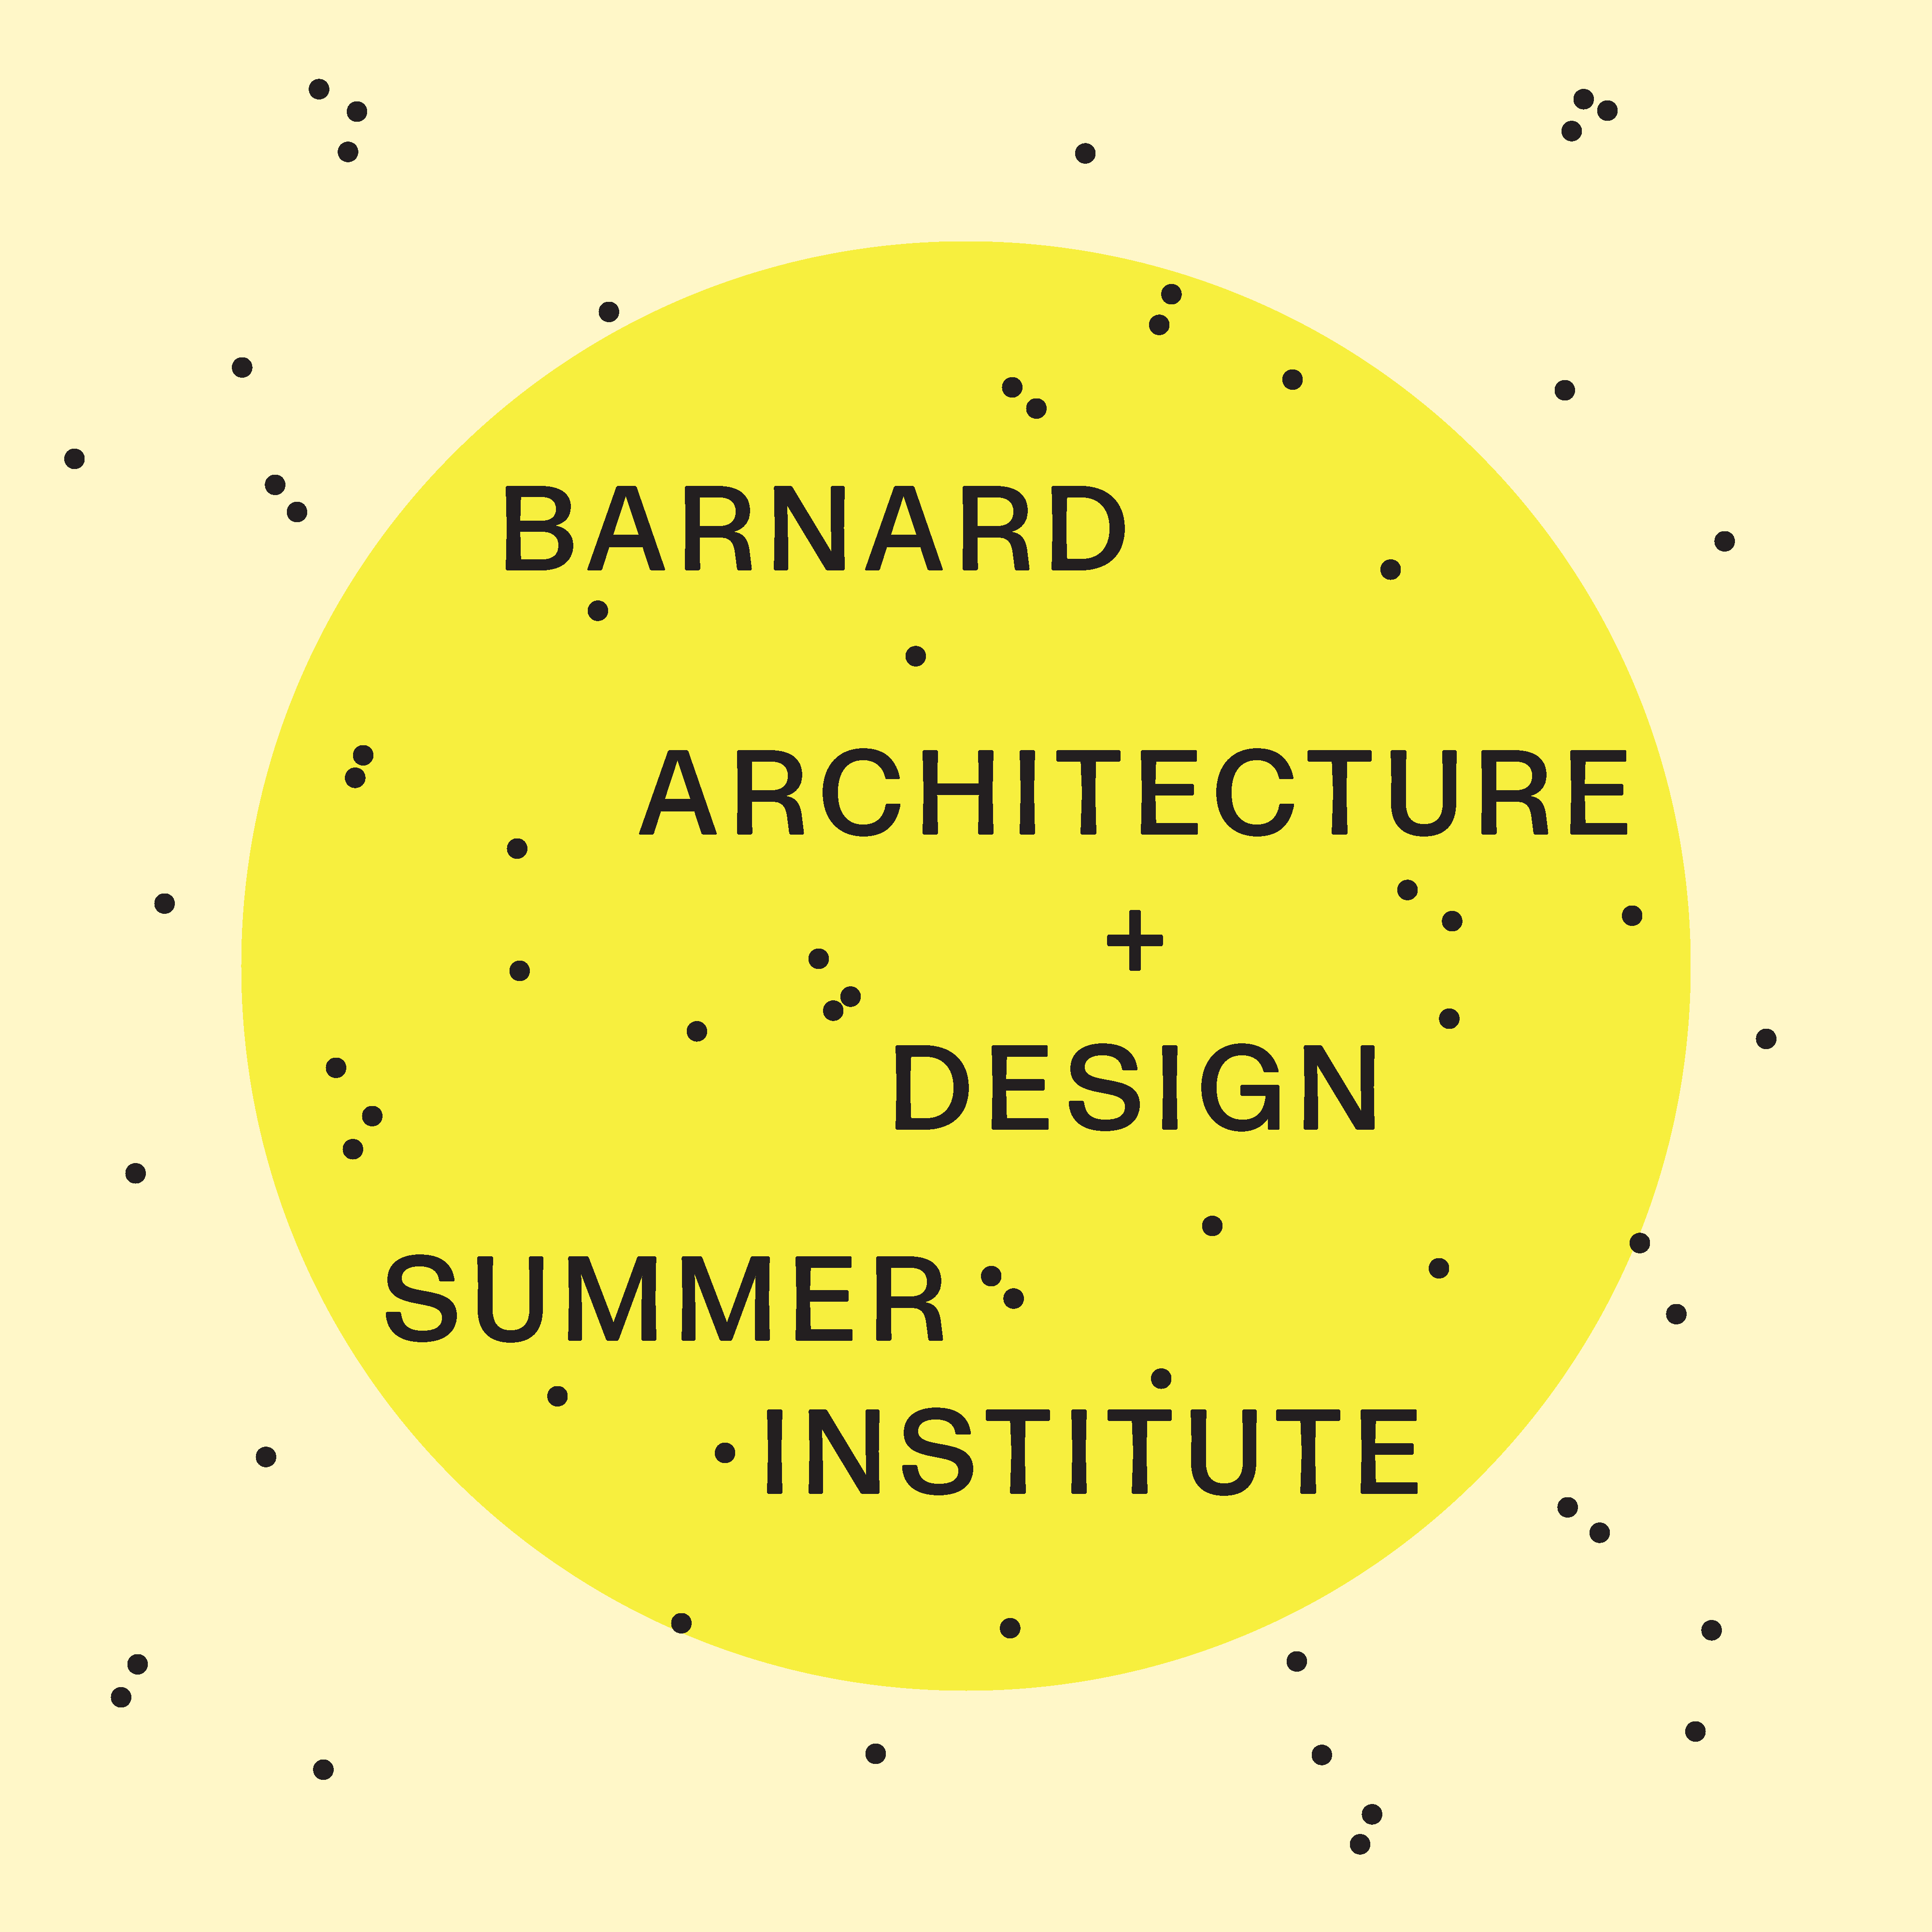 Barnard Architecture and Design Summer Institute